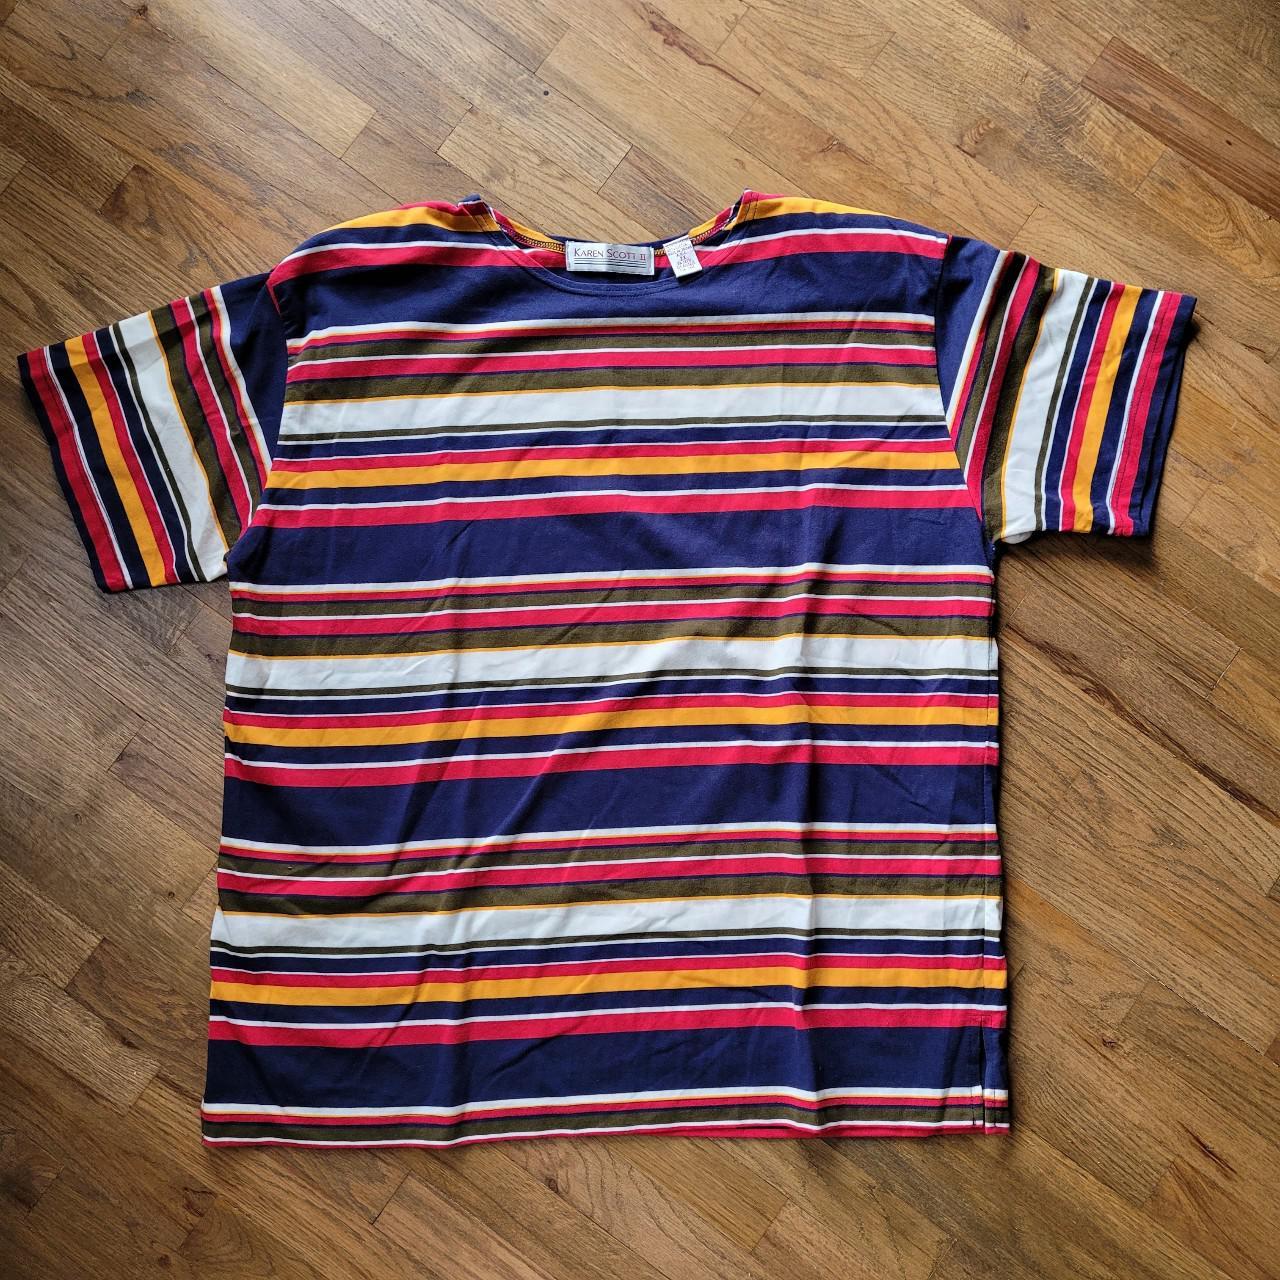 S stripe-t-shirt - Depop